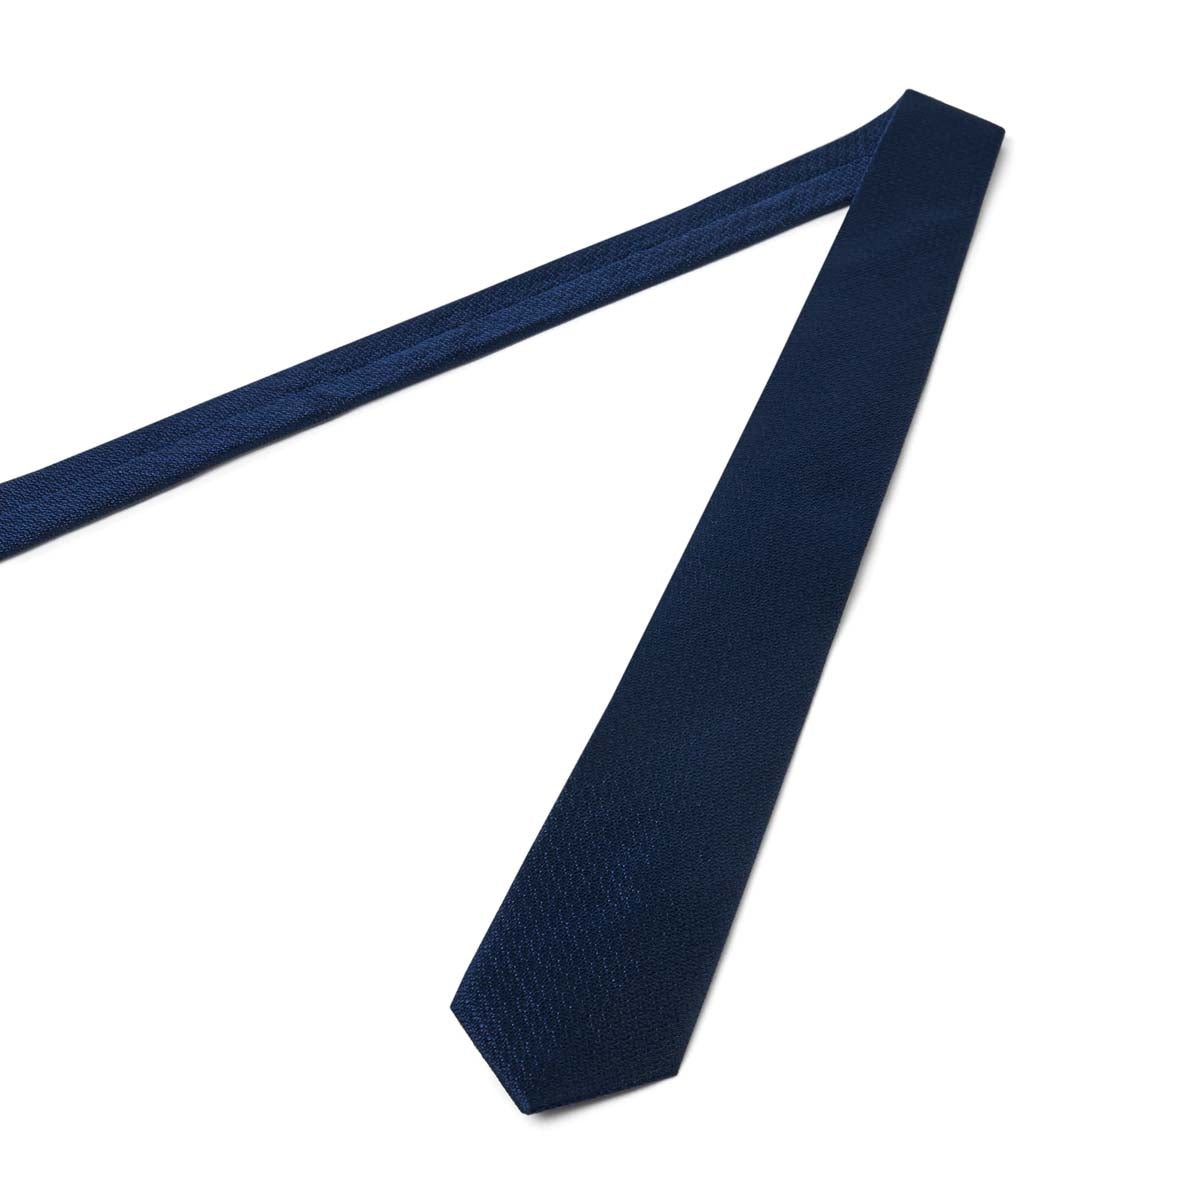 Cravate fine texturée satin bleu marine